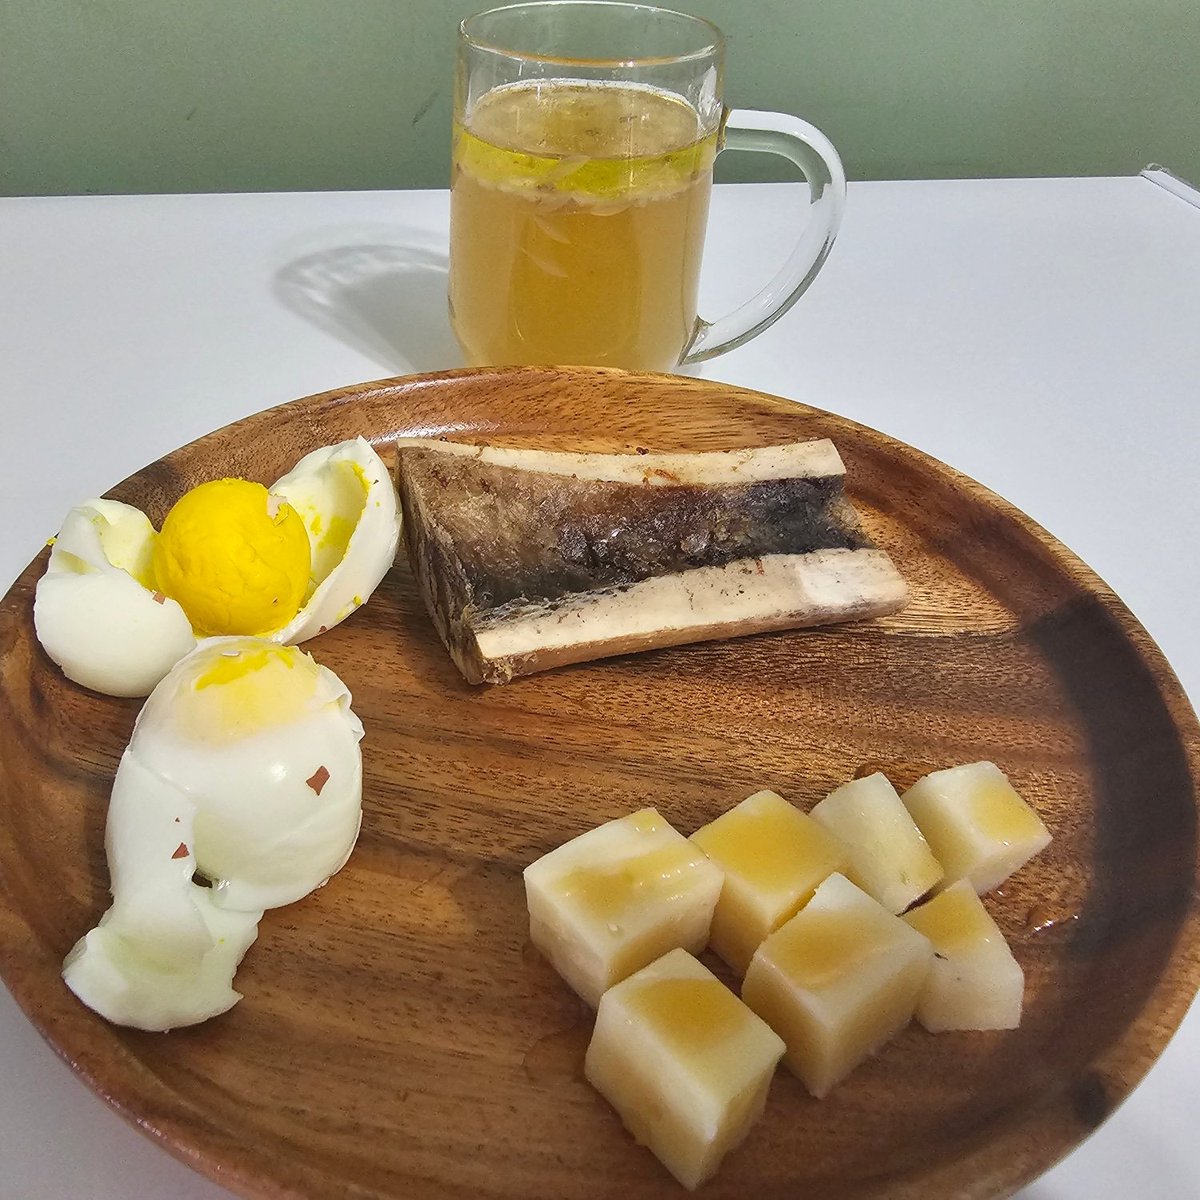 Something super simple but tasty! Homemade bone broth, bone marrow and hard boiled egg.

#animalbasediet 
#animalbasednutrition 
#animalbased